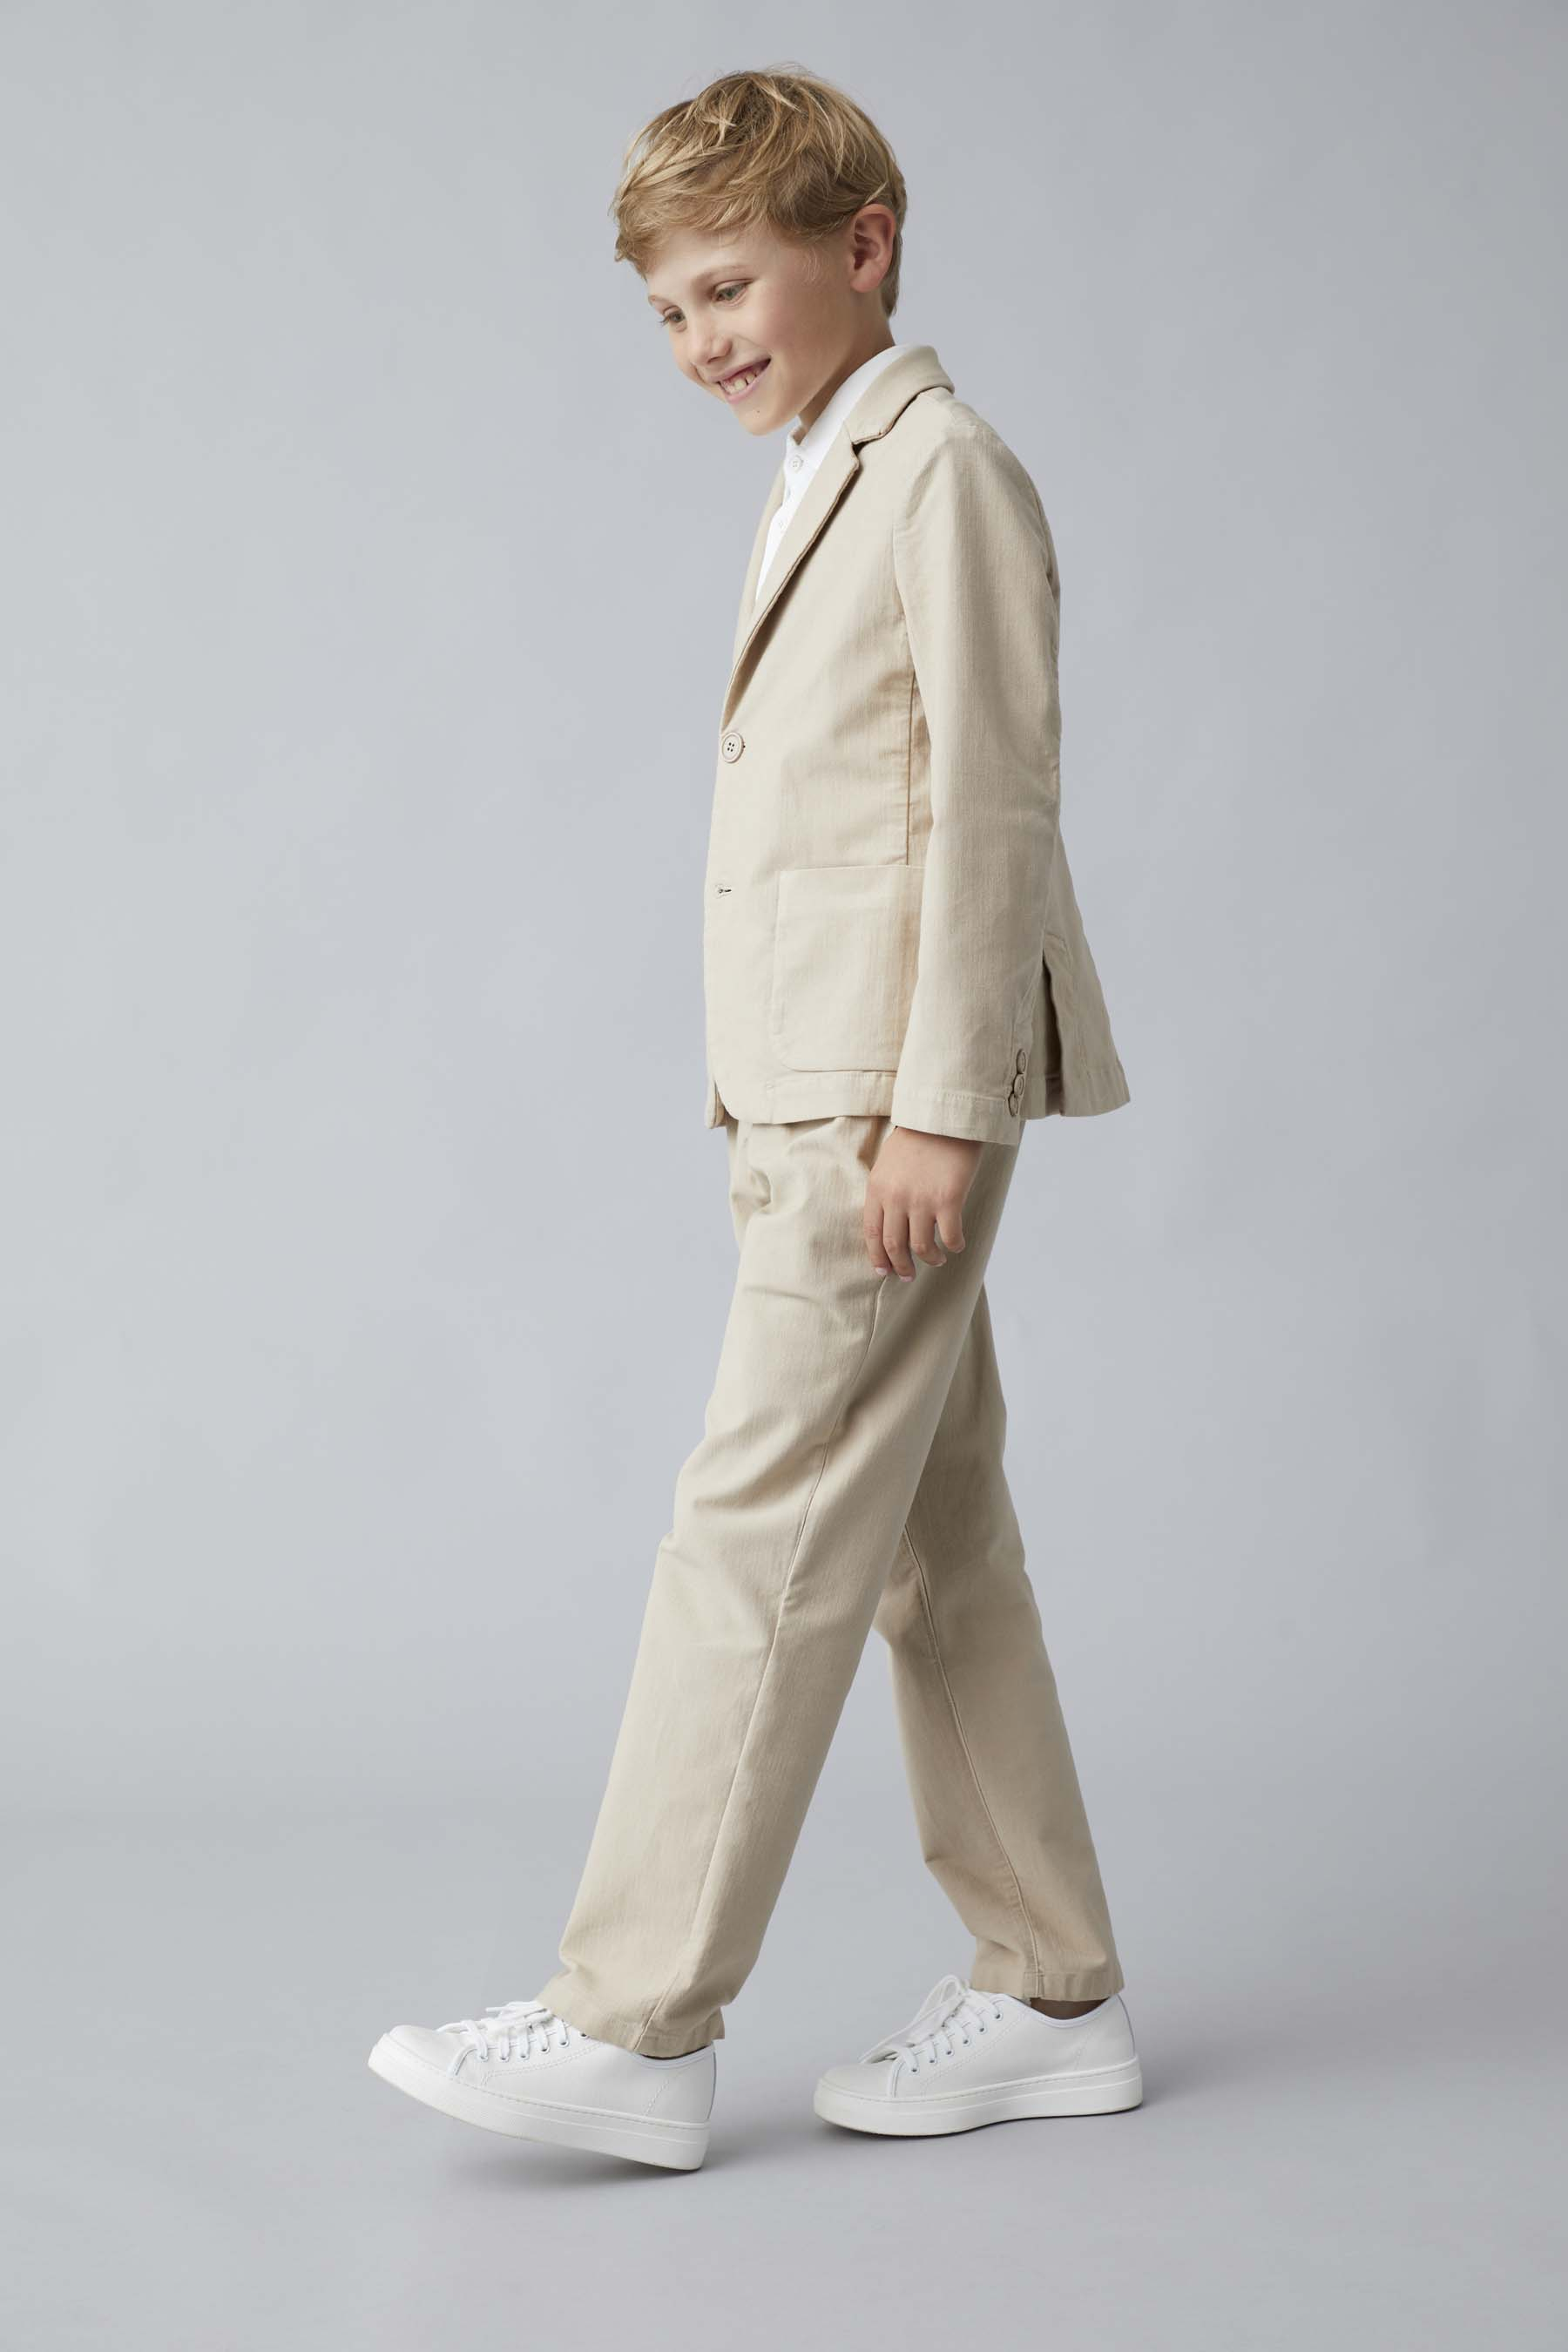 Longline trousers in herringbone-patterned stretch cotton - Brown | Il Gufo